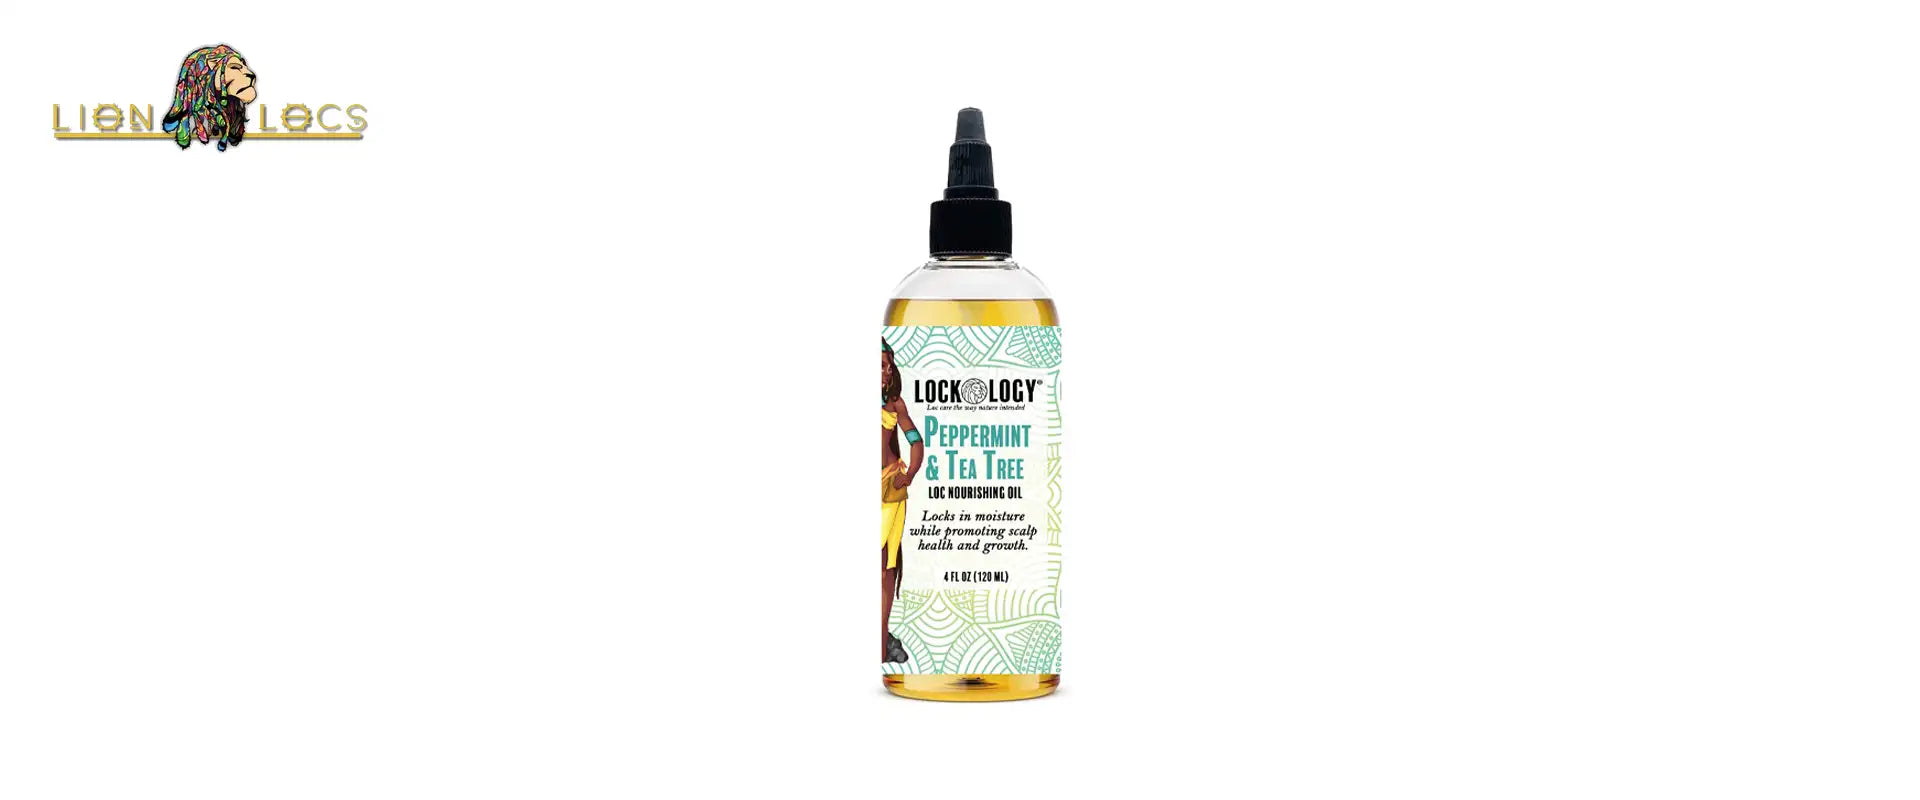 Lockology Peppermint Tea Tree Oil for Locs